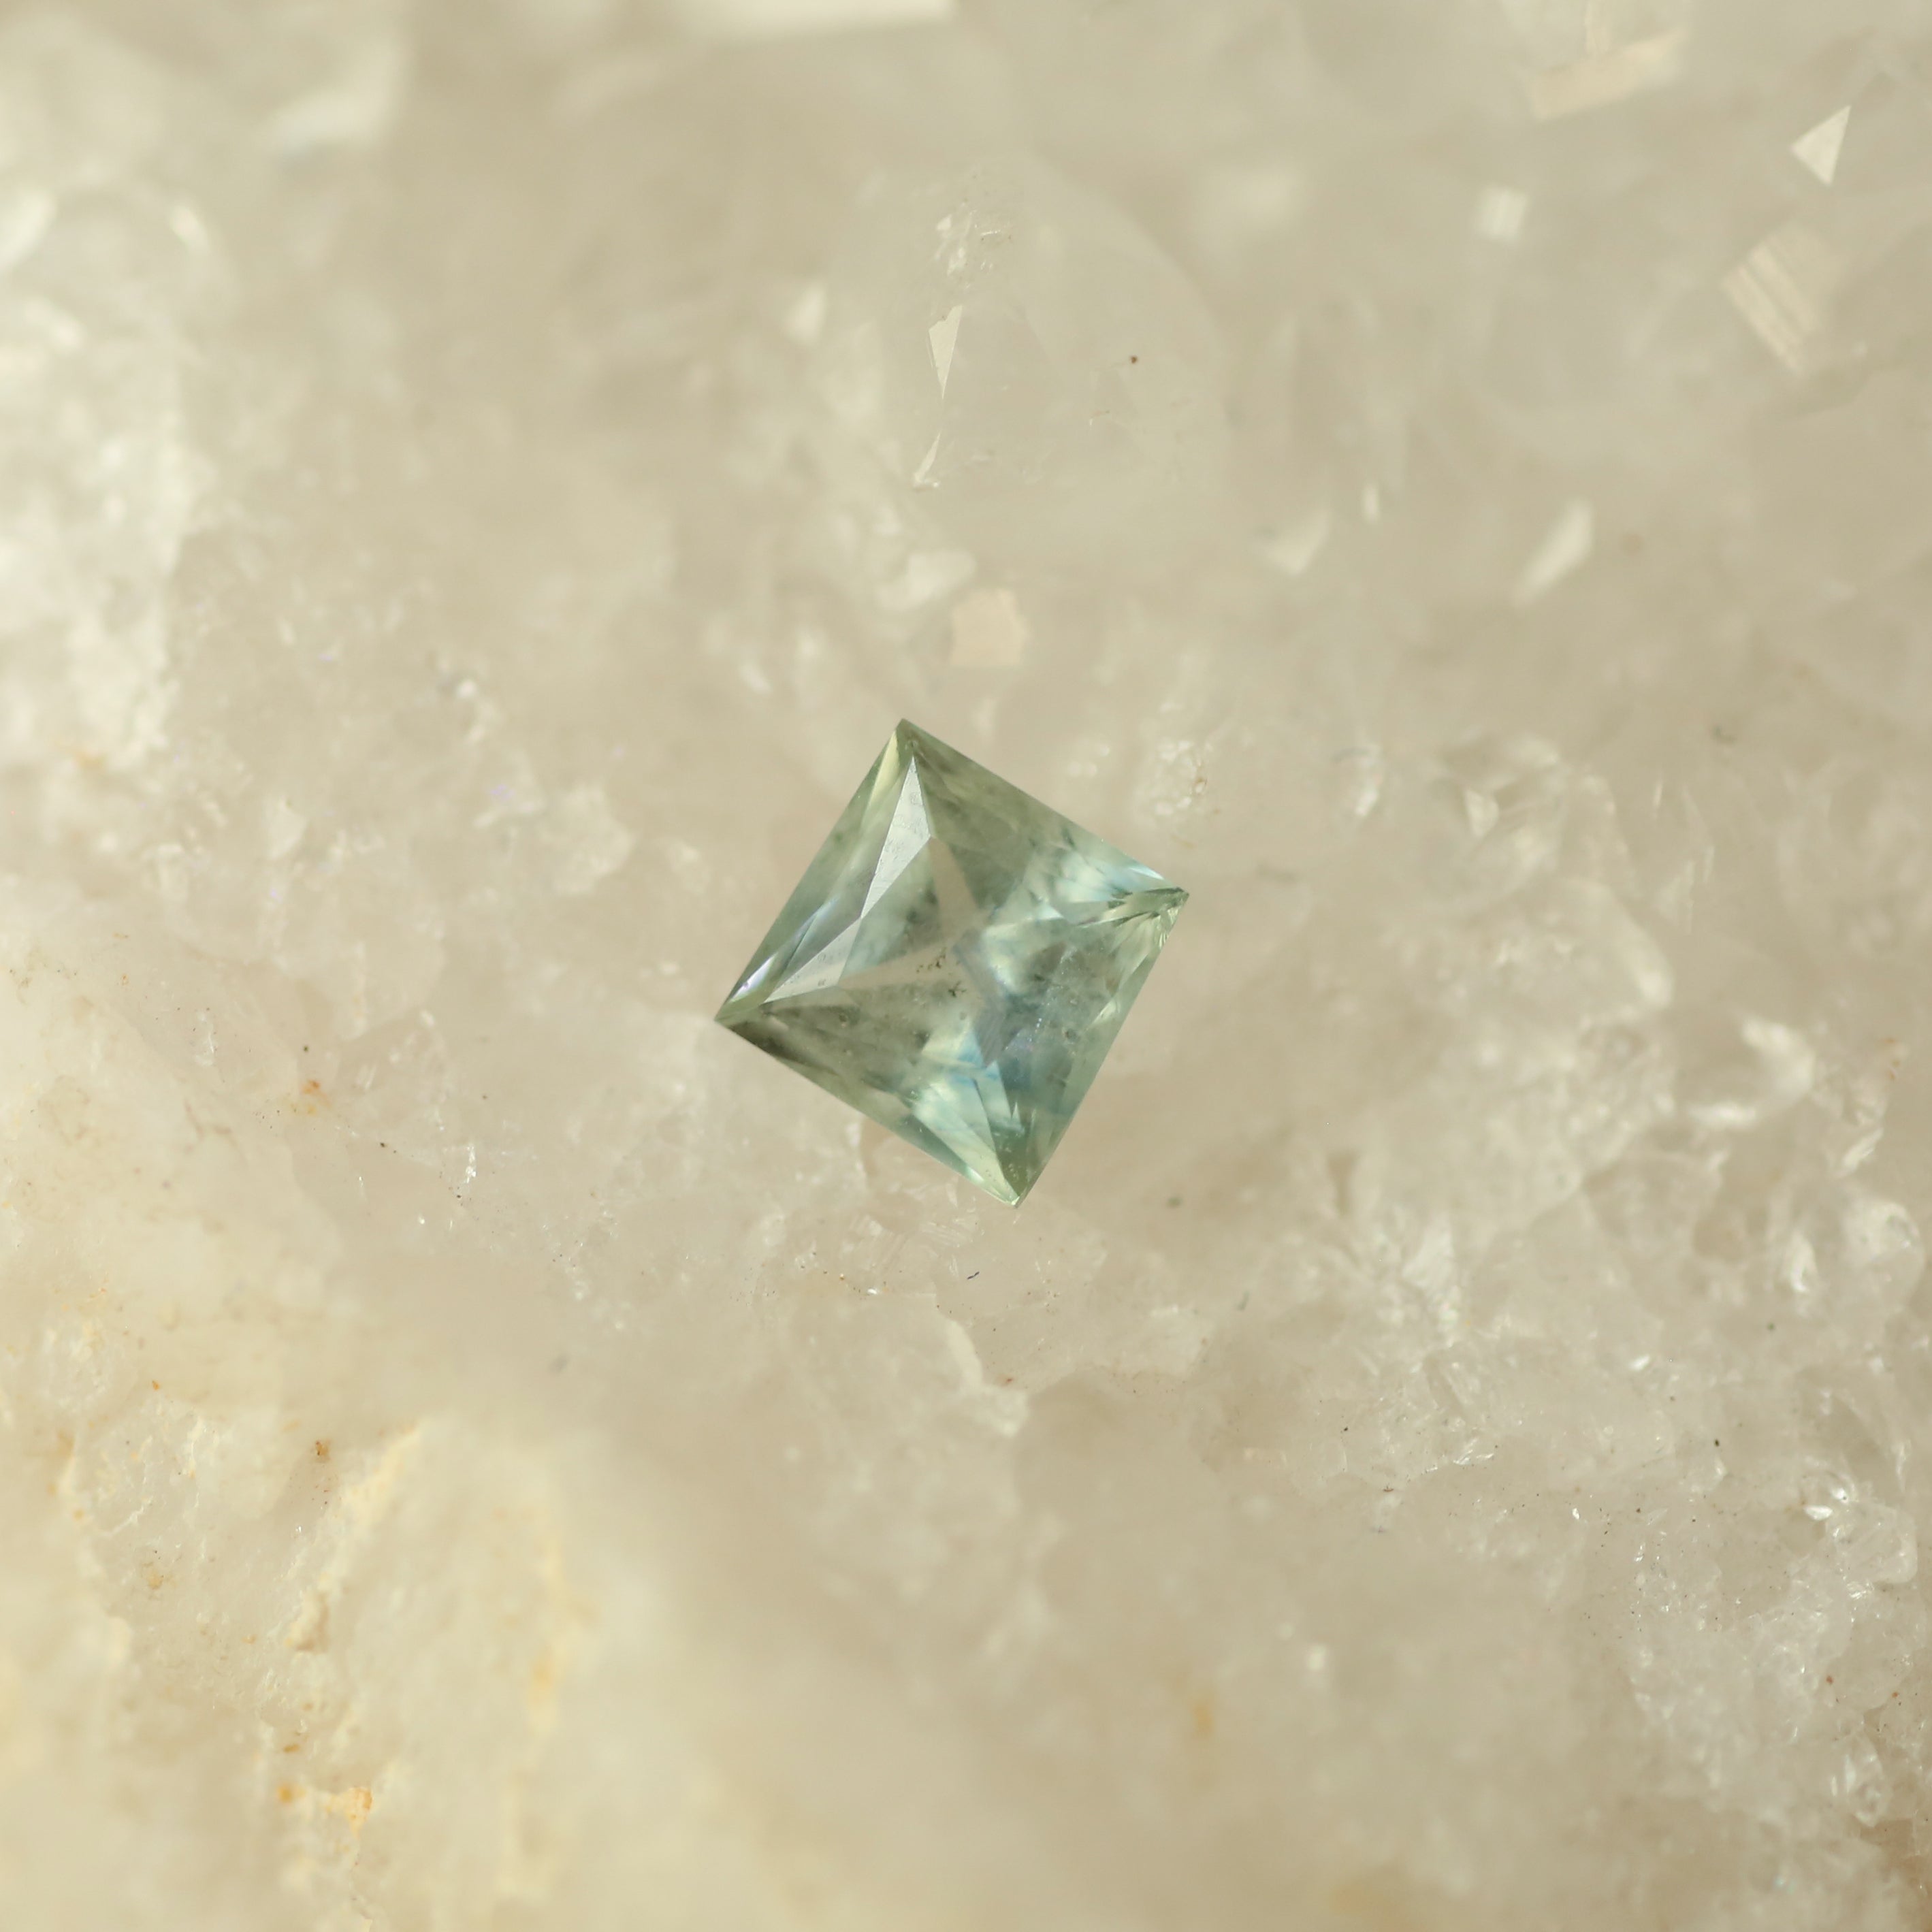 Montana Sapphire .61 CT Mint Green/Teal Princess Cut